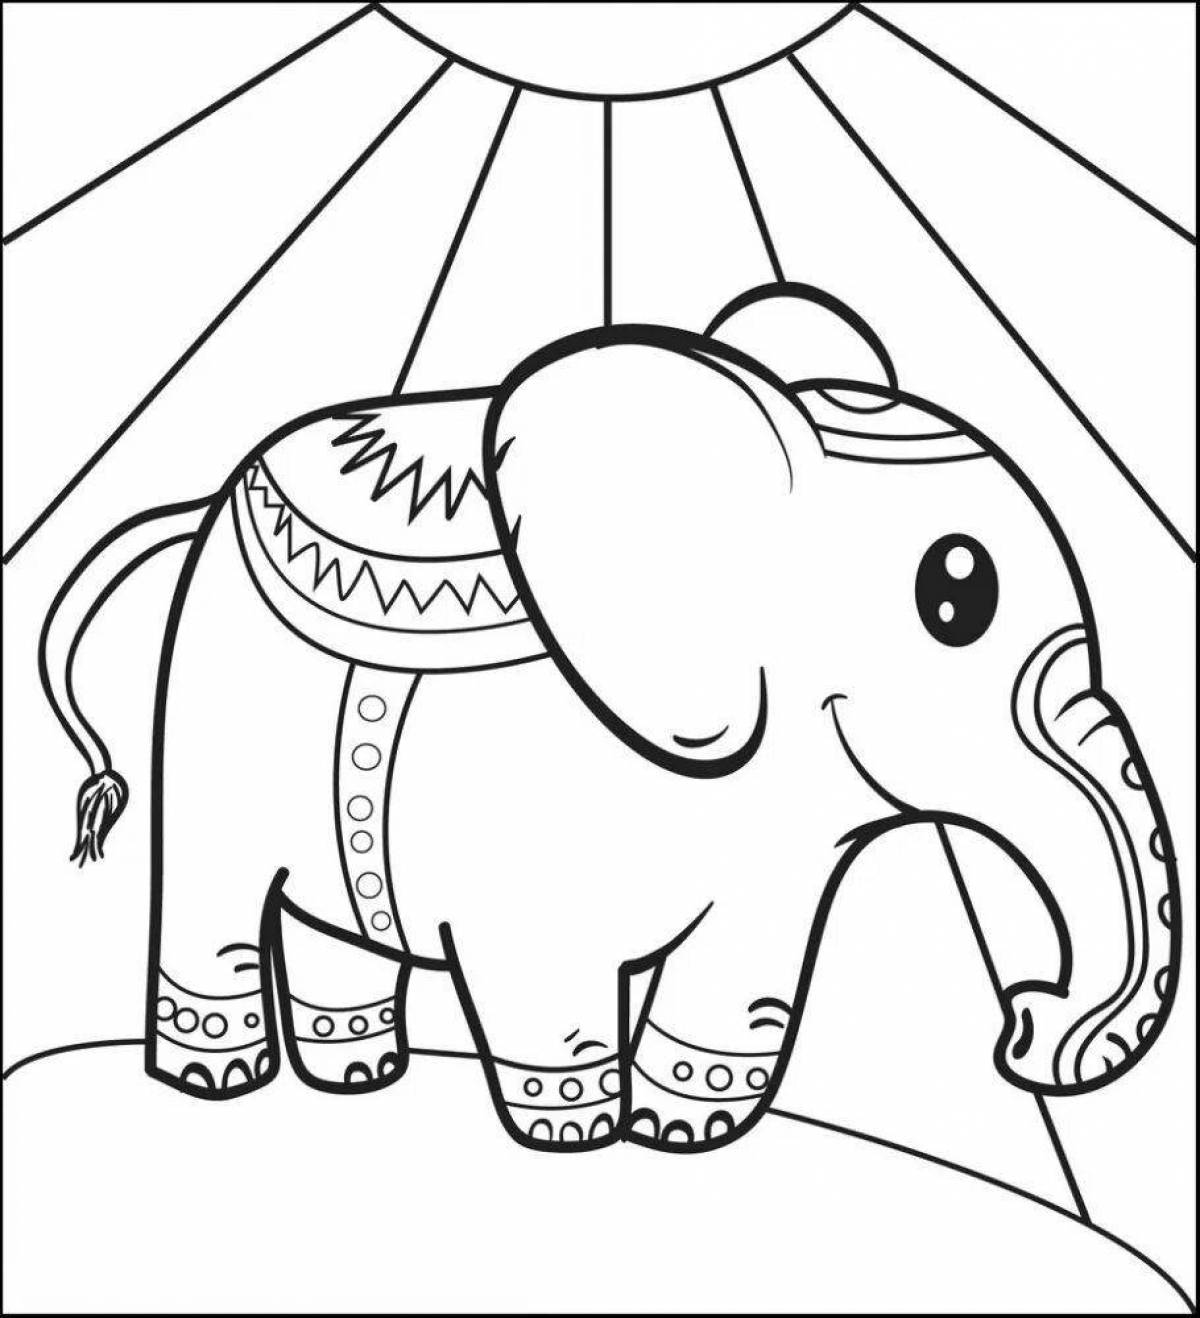 Coloring page joyful elephant